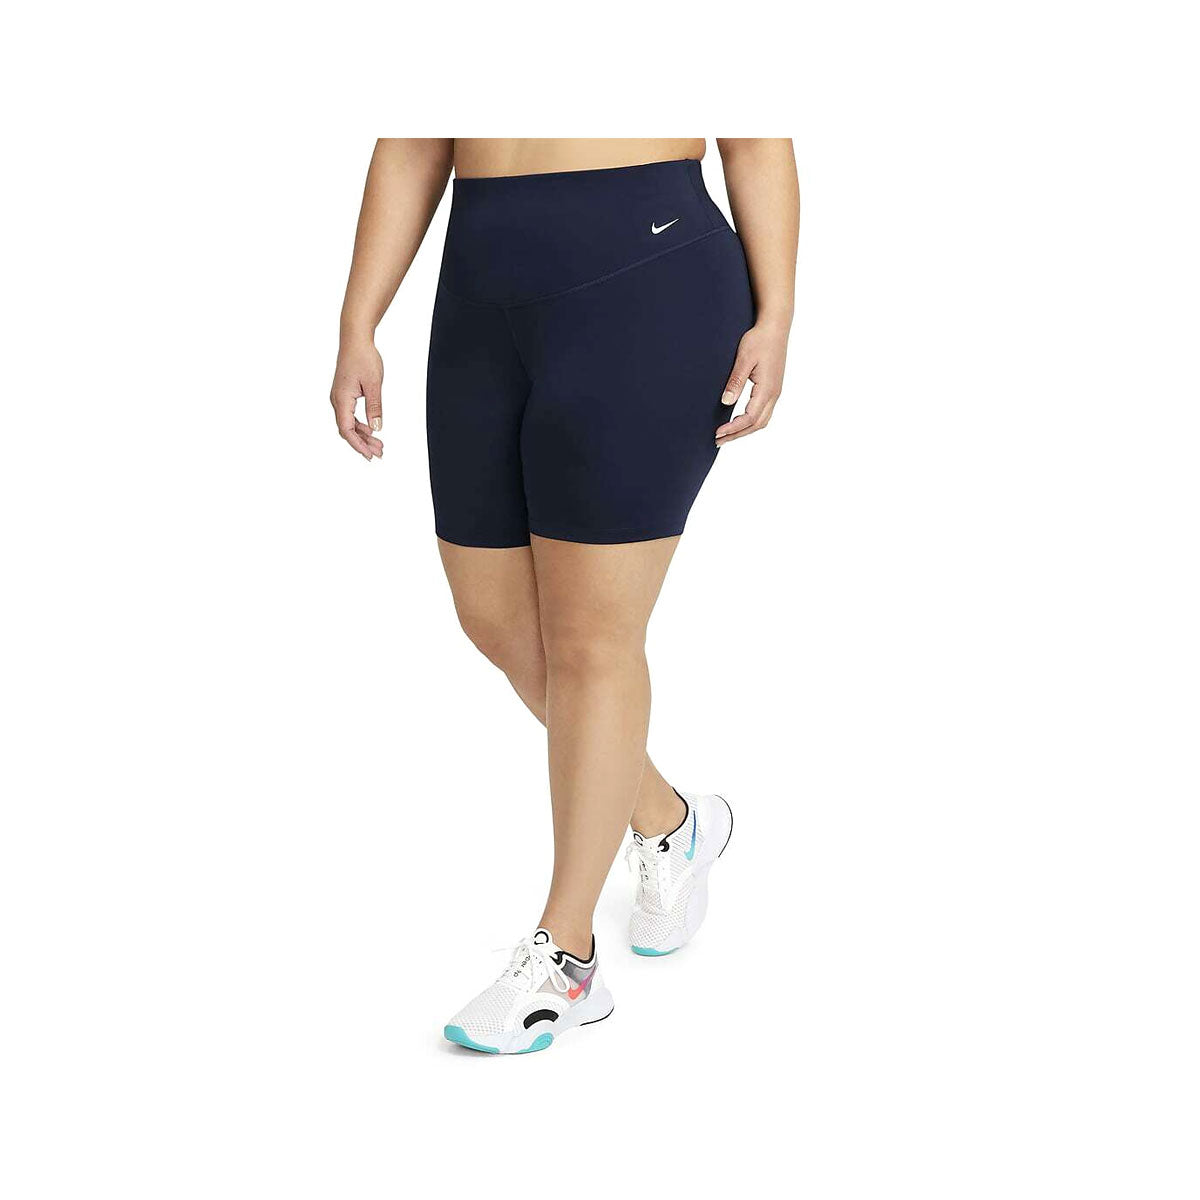 Nike Women's Dry Tight Fit Bike Shorts 7